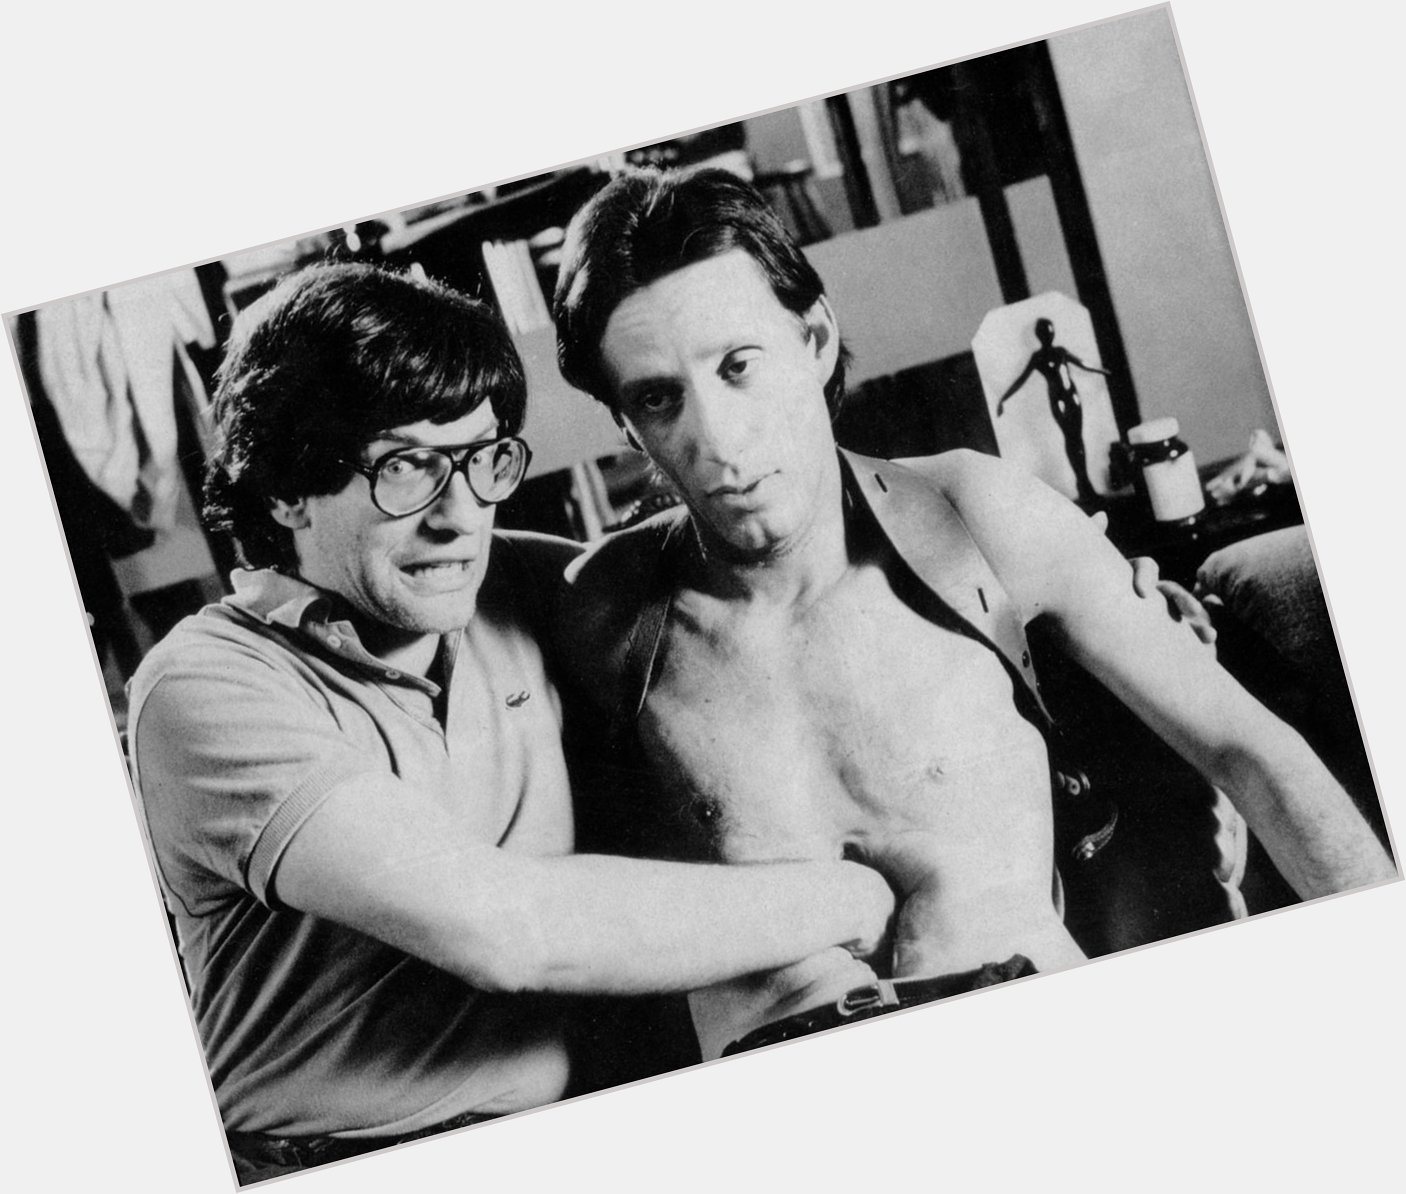 Happy 75th birthday to filmmaker David Cronenberg (The Fly, Videodrome, Scanners):  